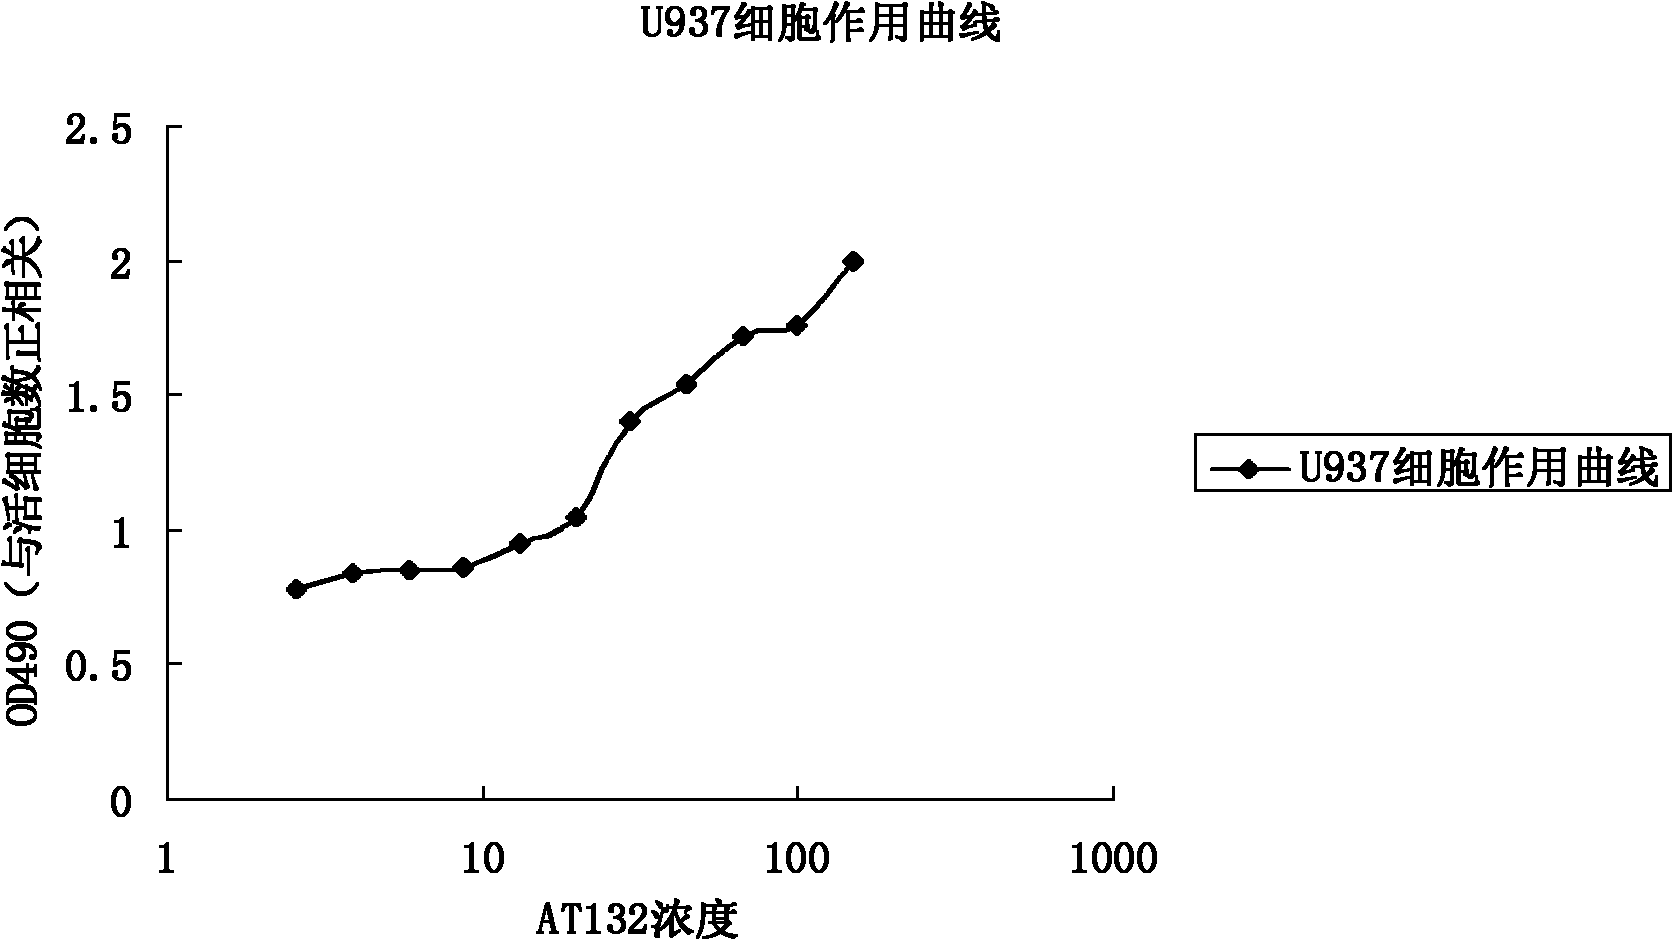 Anti-tumor necrosis factor alpha human-derived antibody